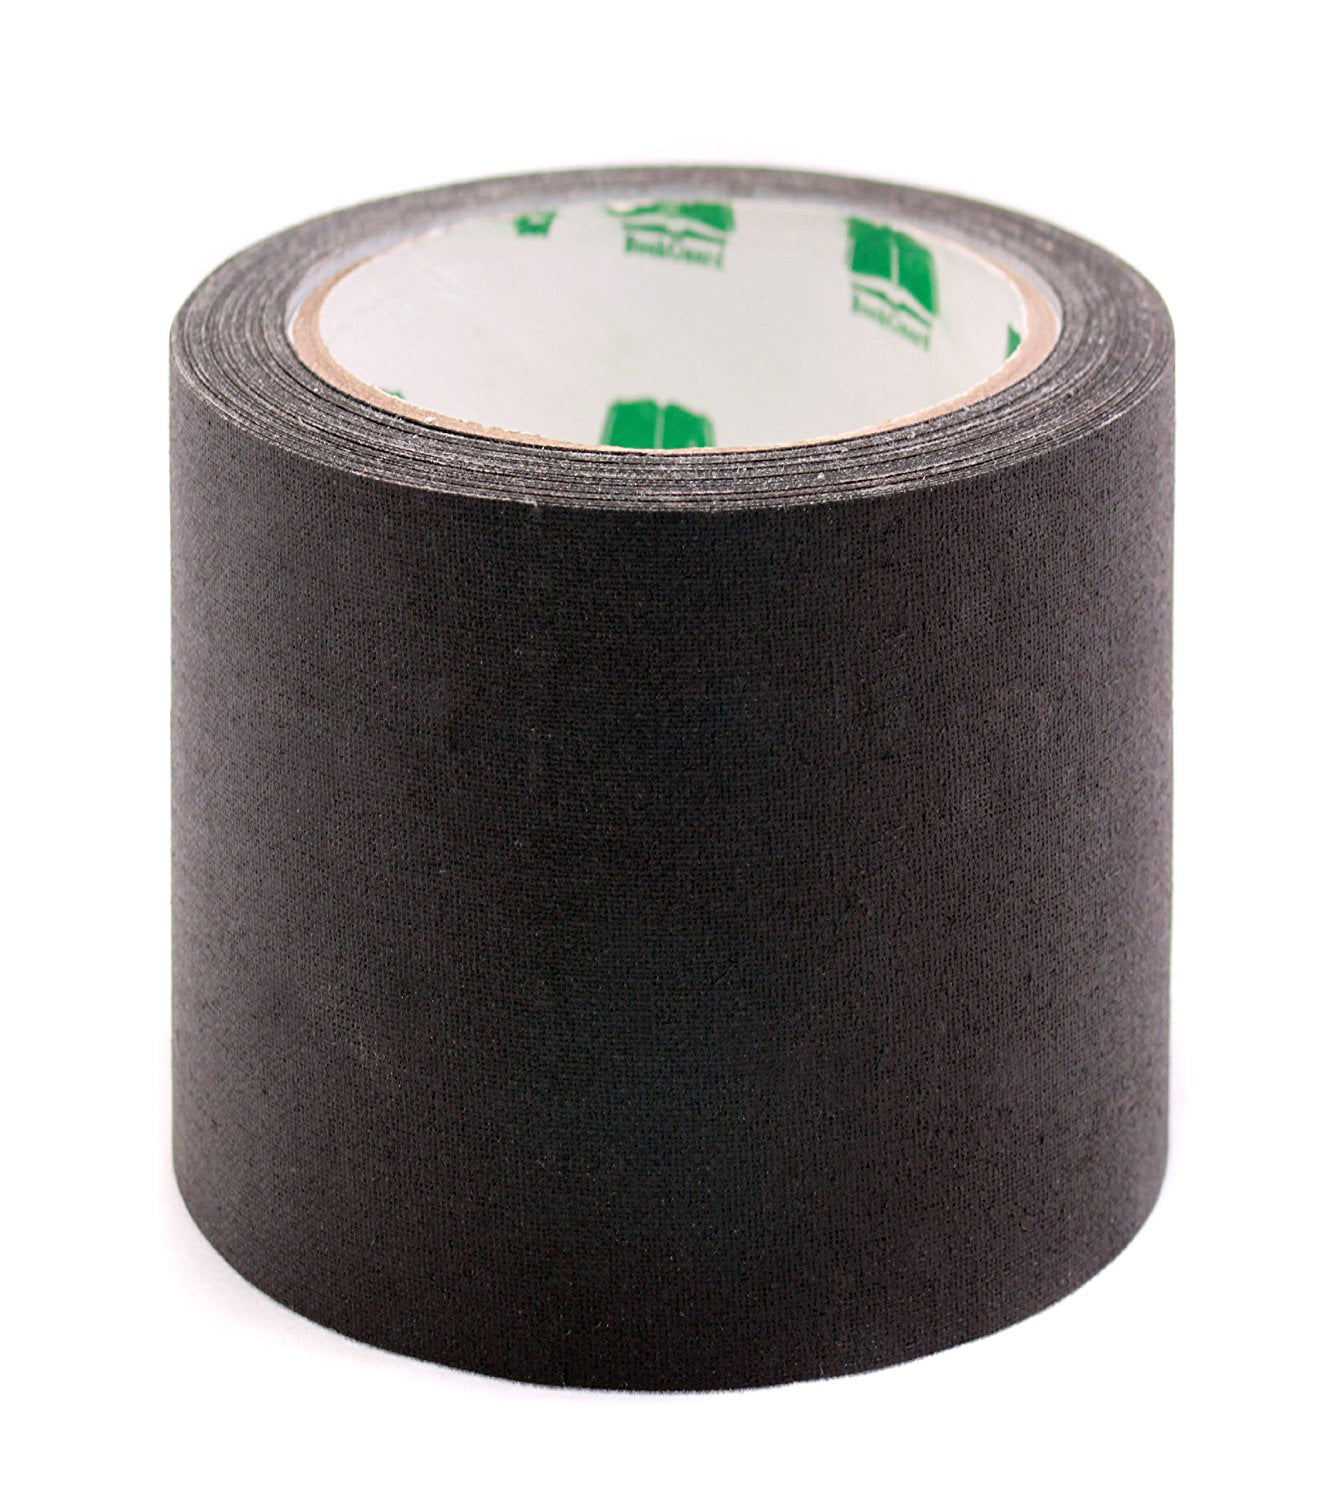 15 Yard Roll BookGuard Brand 4 Black Colored Premium-Cloth Book Binding Repair Tape 